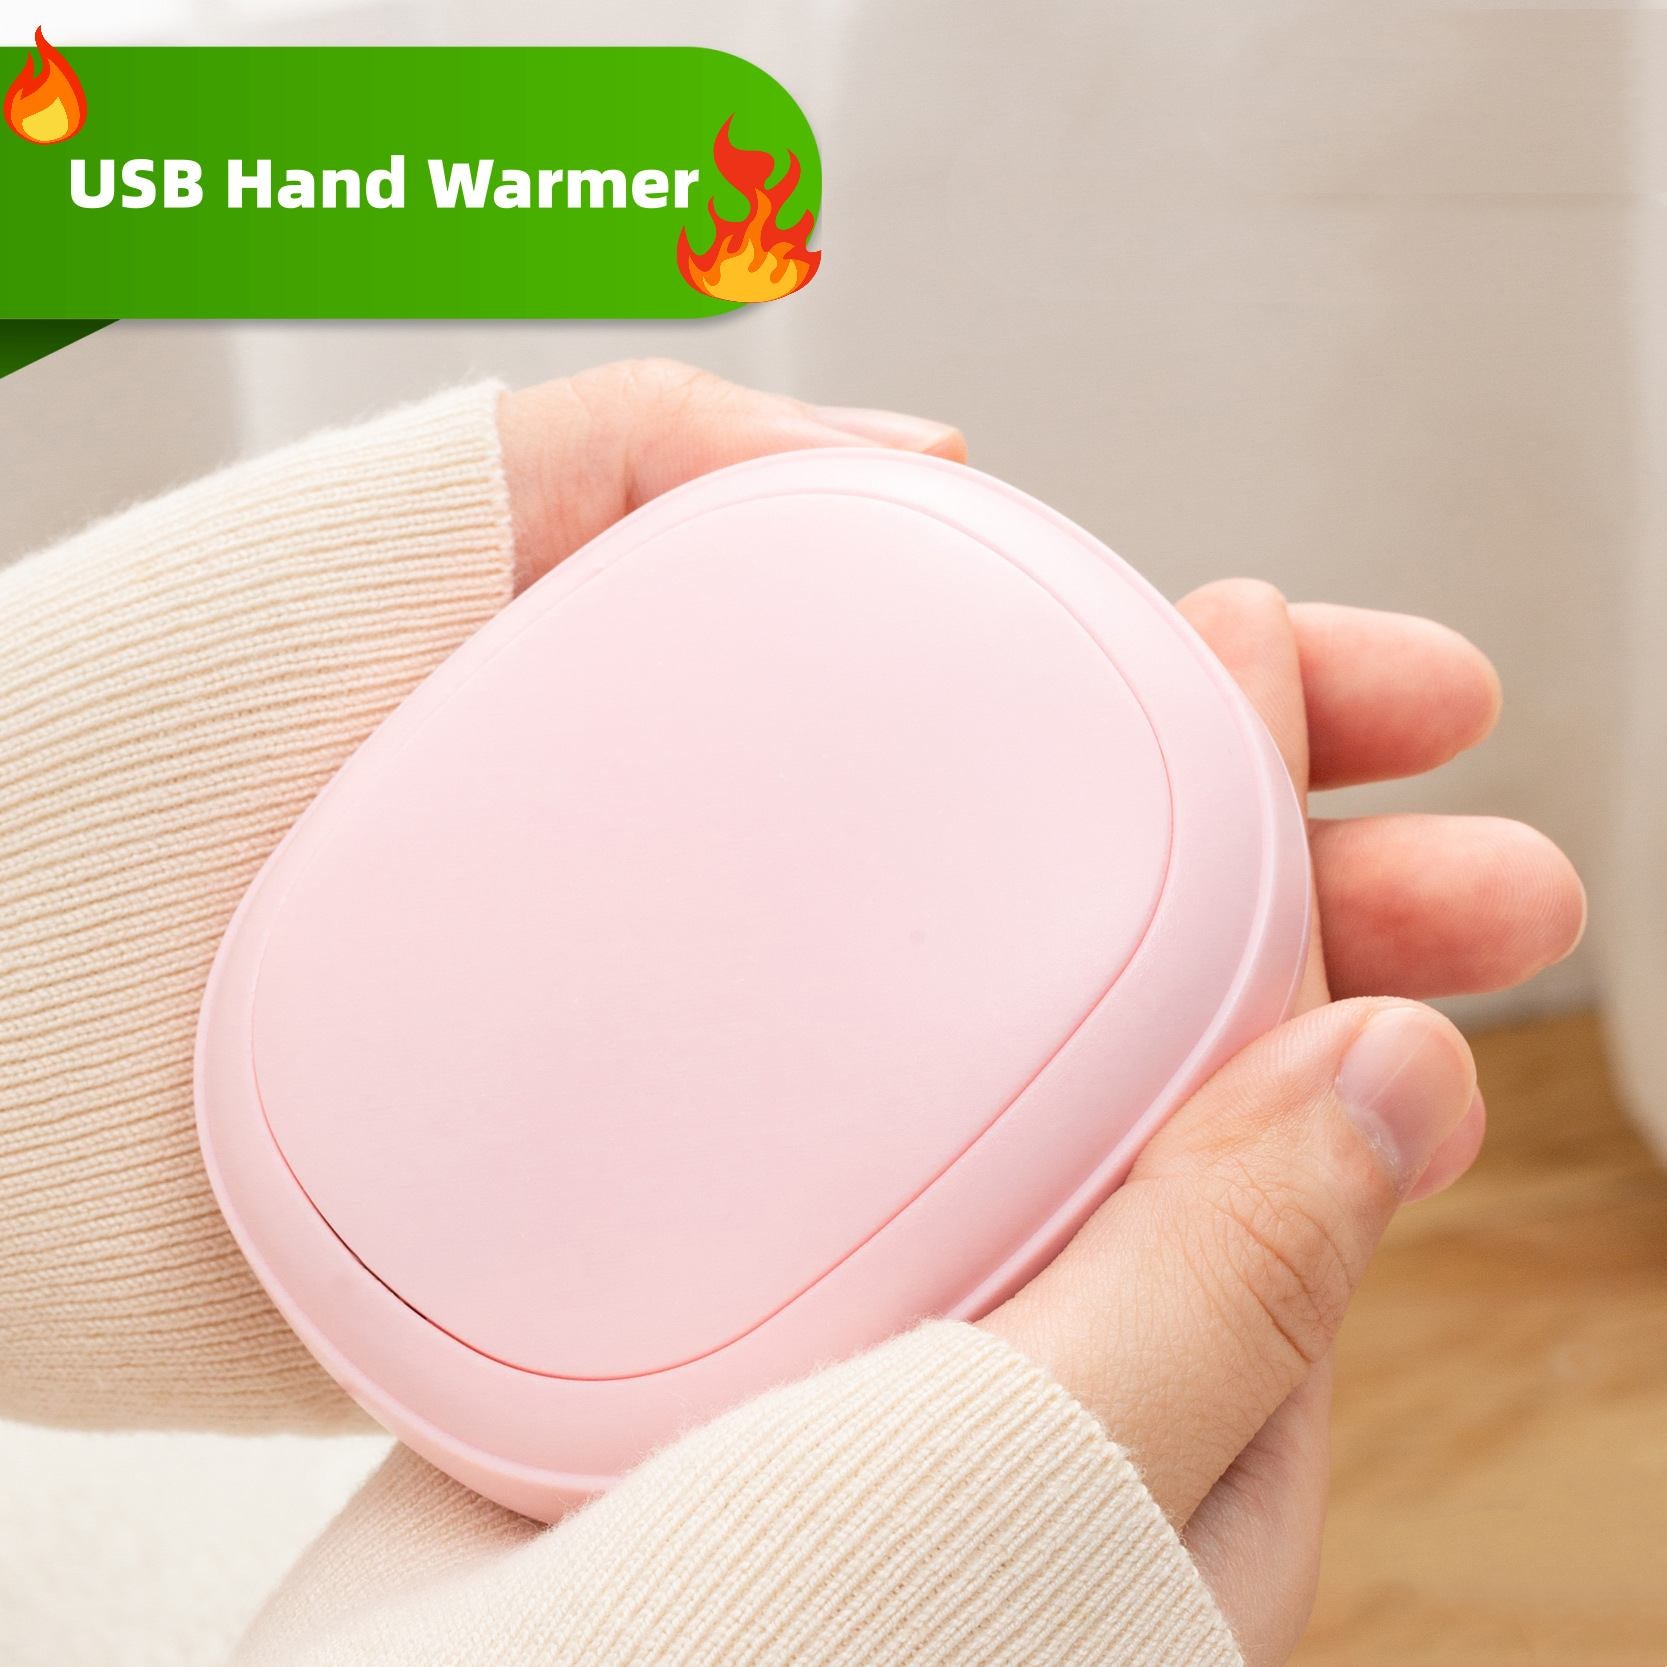 USB Hand Warmer - Portable Pebble Hand Warmer with Single Side Heating